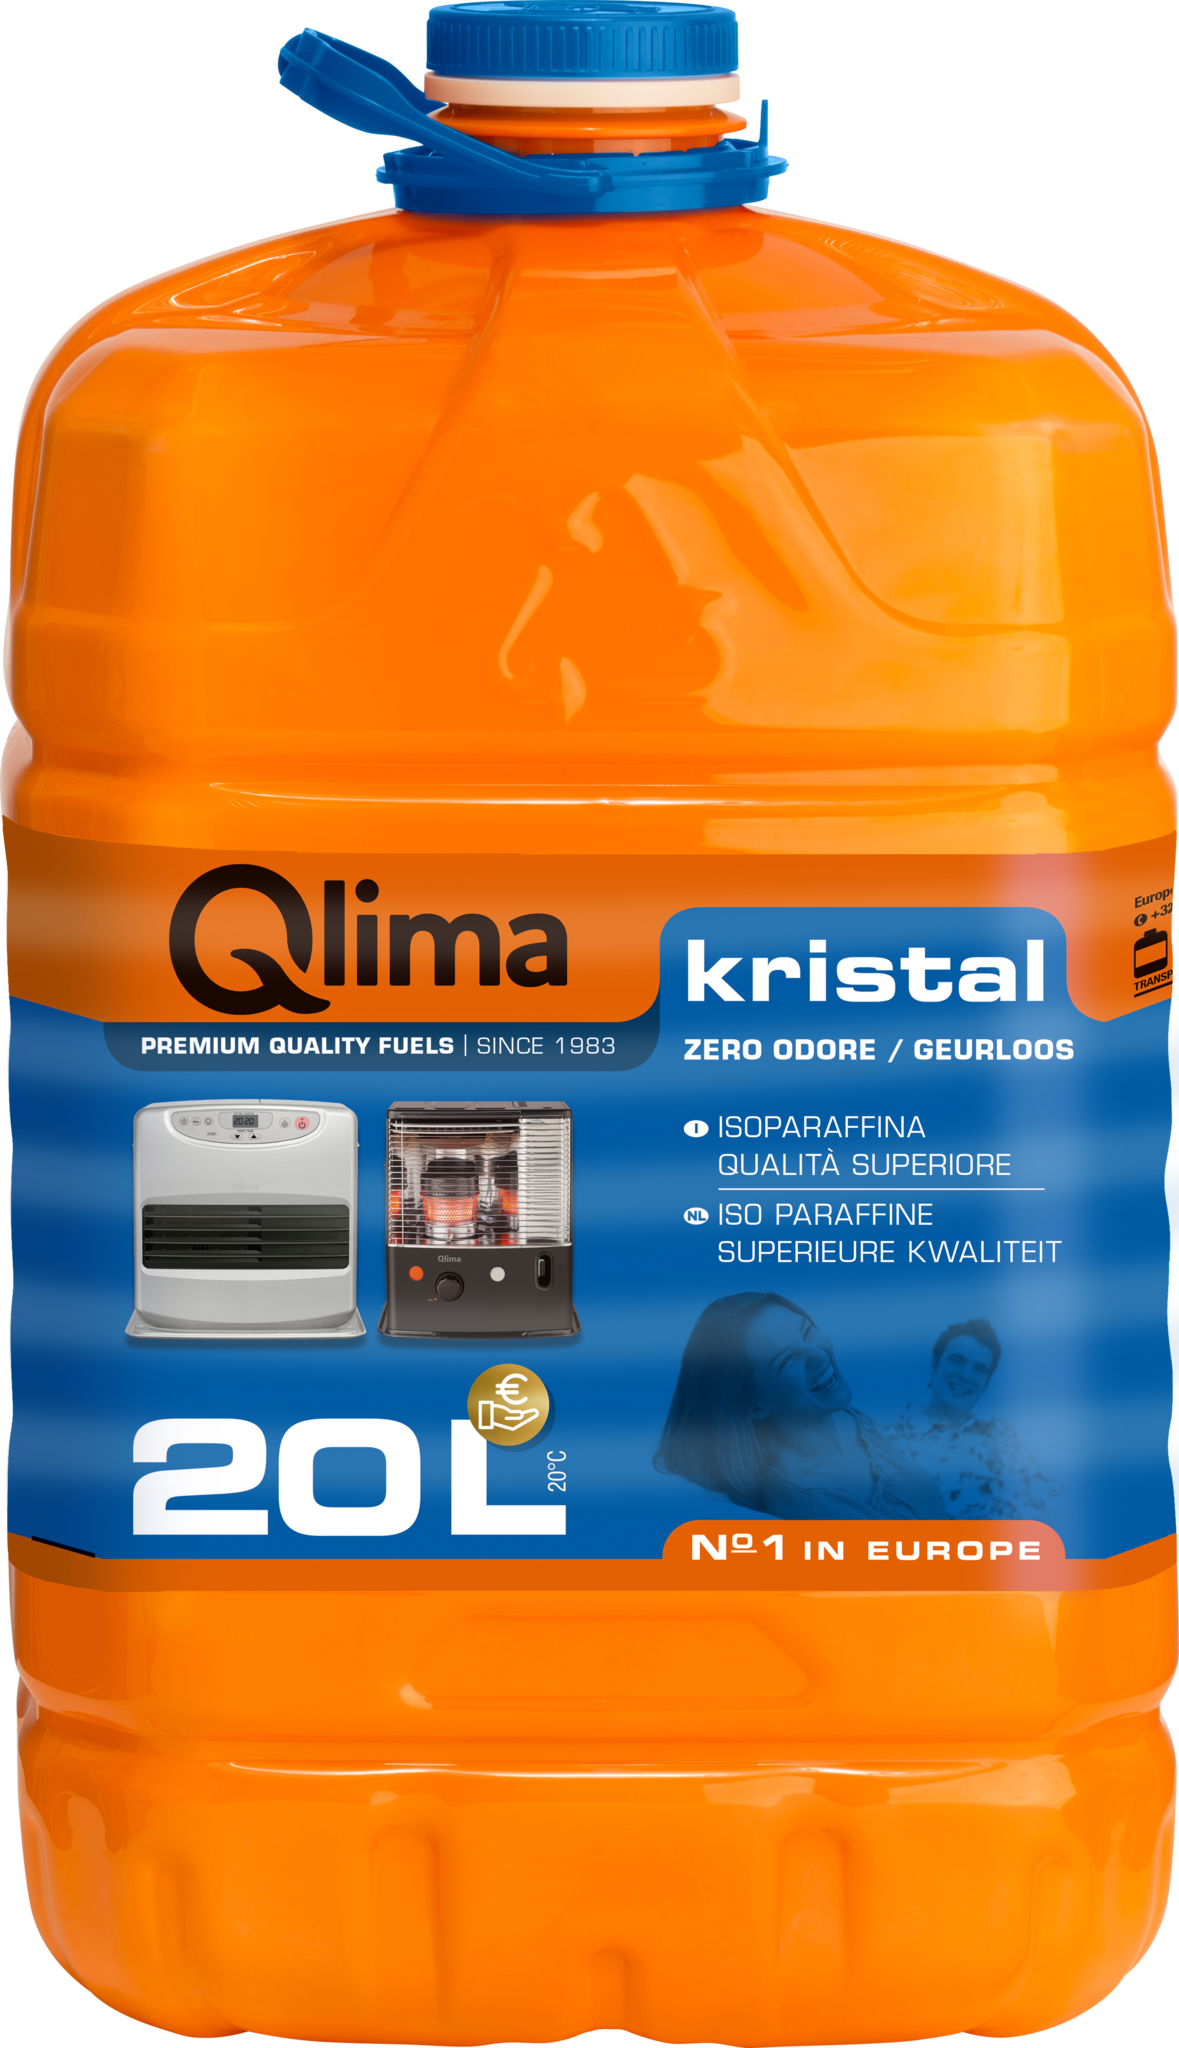 Kiwi marketing extract Qlima geurloze kachelbrandstof Kristal 20 liter | Climatewebshop.com